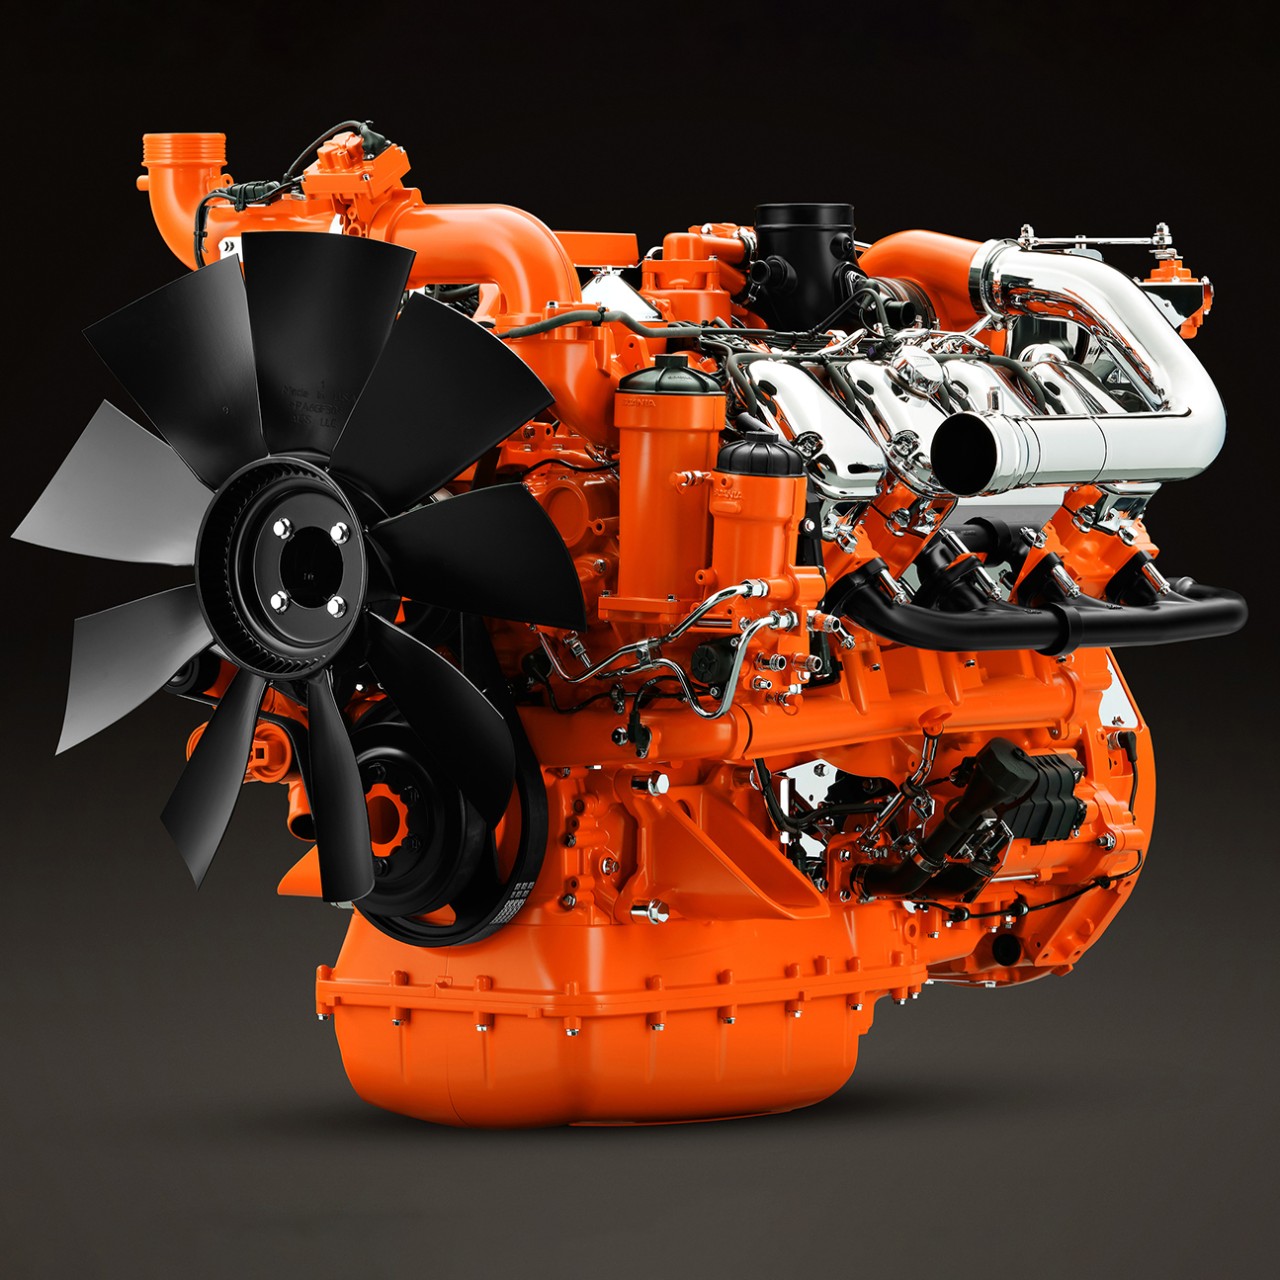  Motorul electric industrial de 16 litri de la Scania